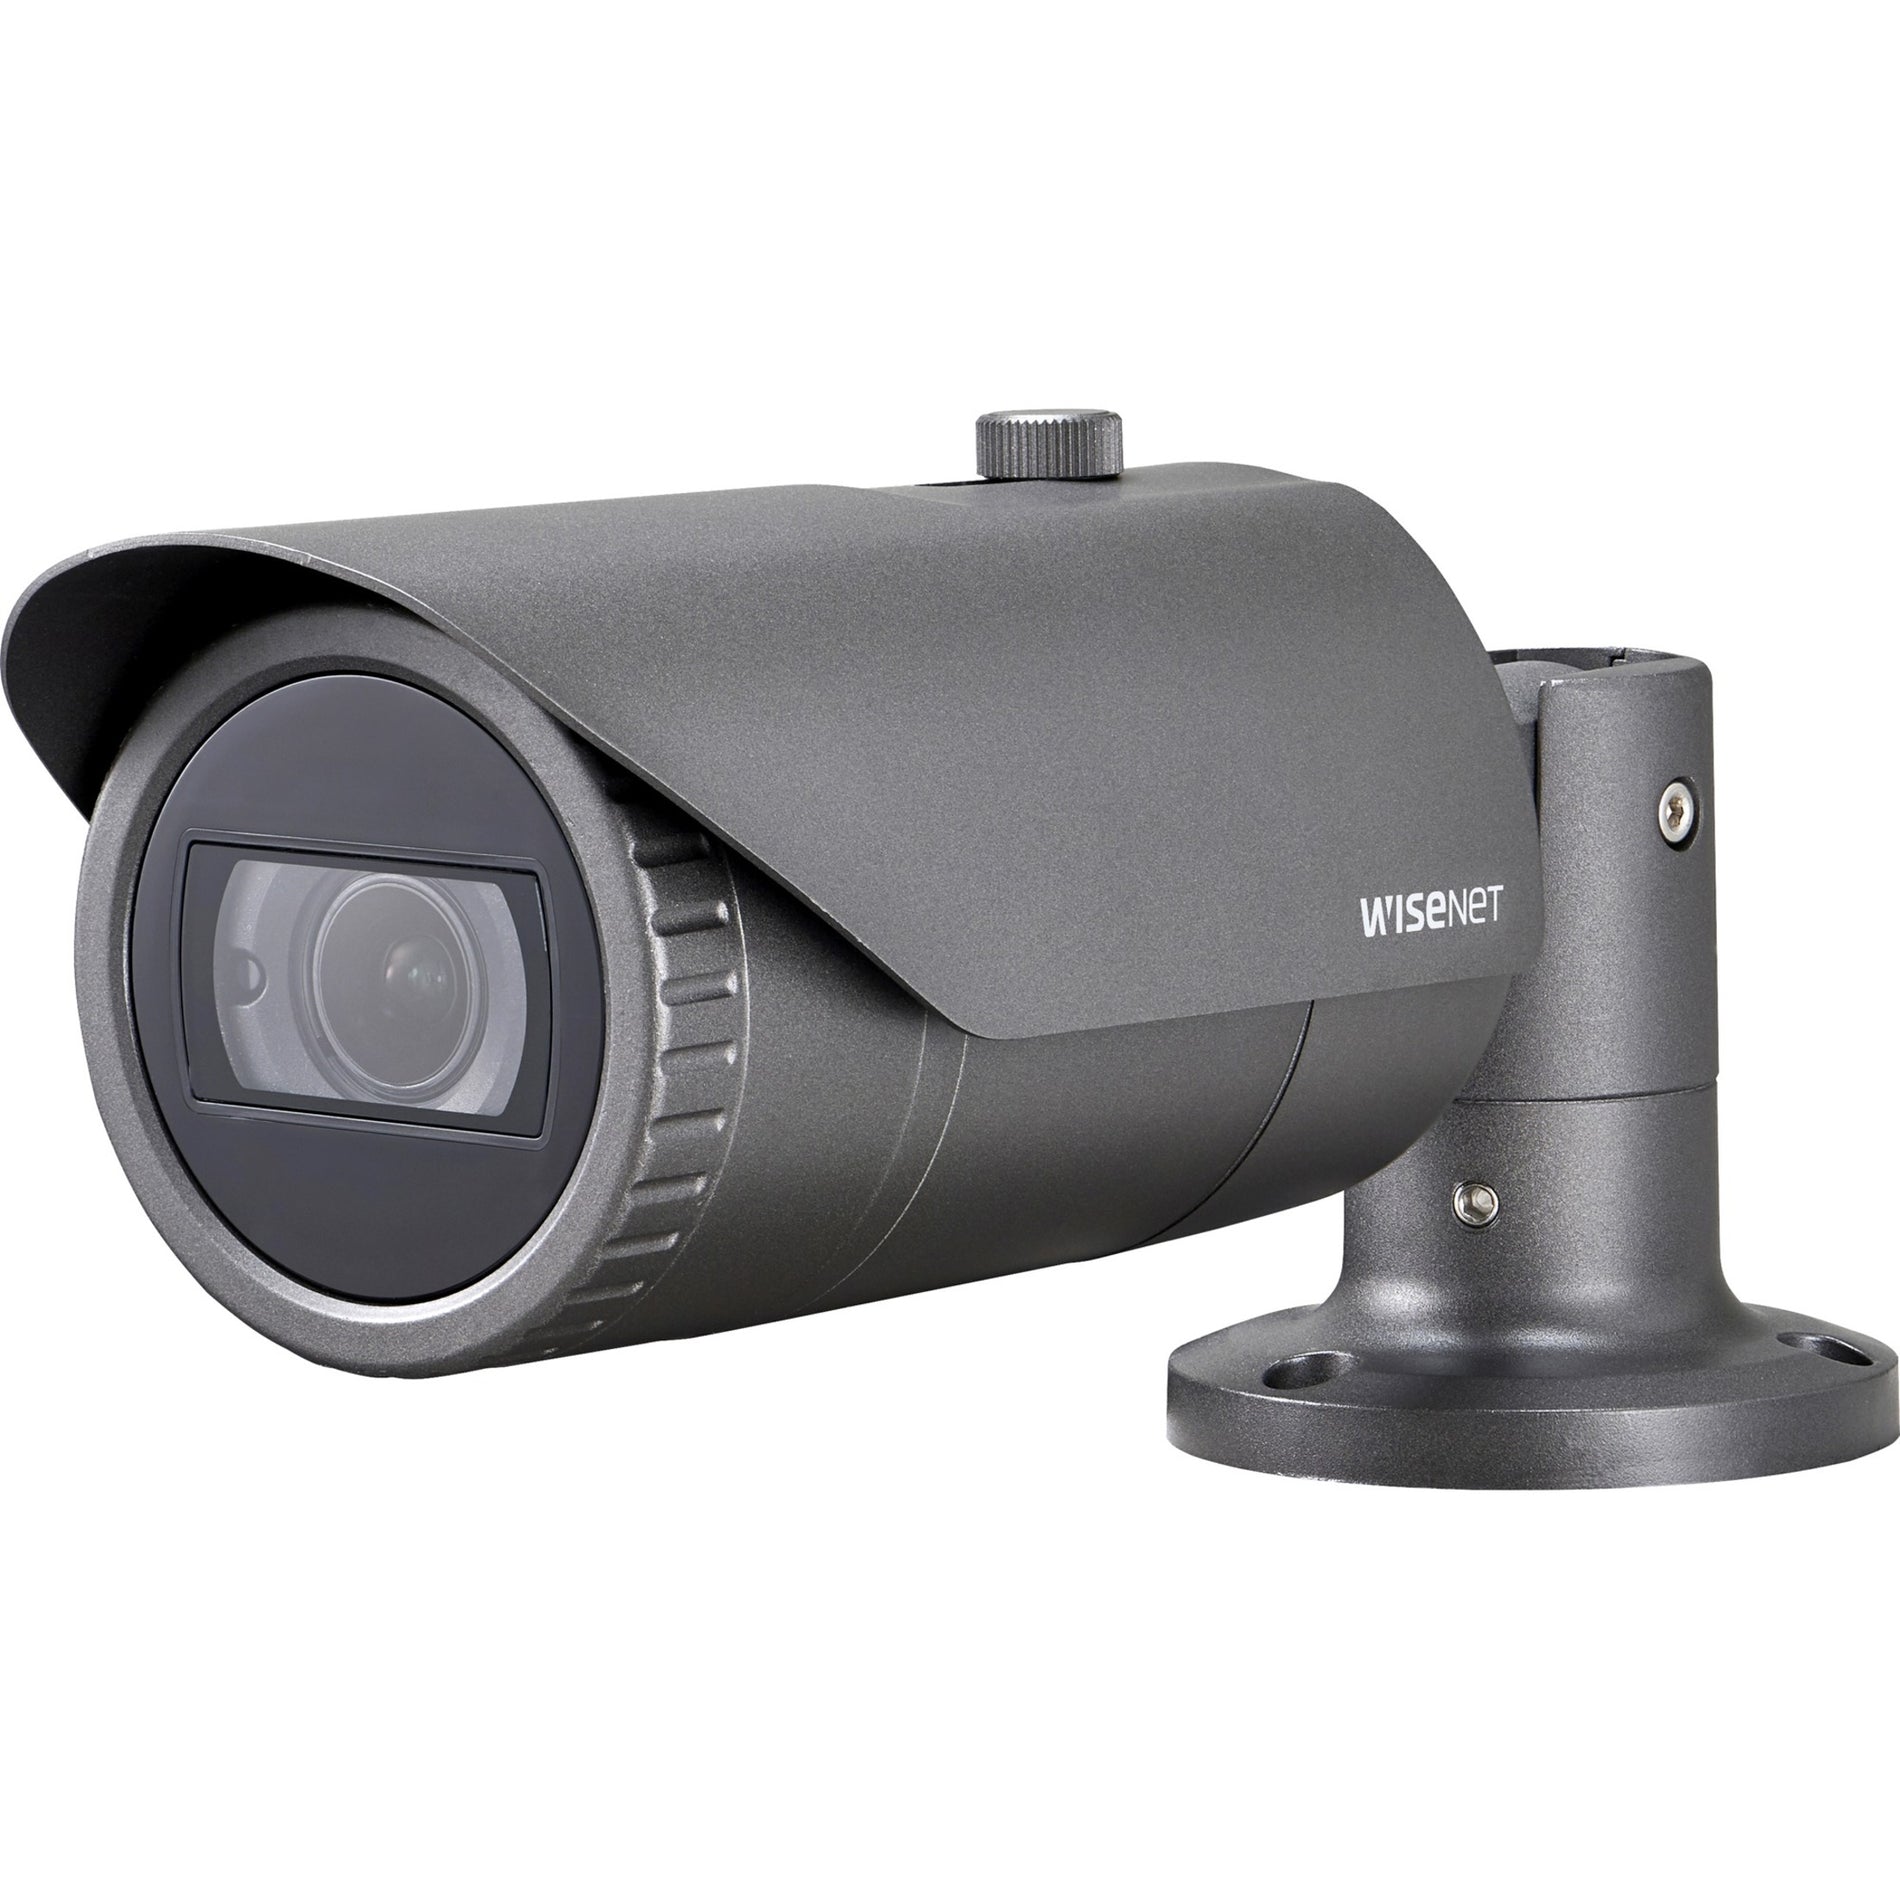 Wisenet HCO-6070R 2MP Analog HD IR Bullet Surveillance Camera, Full HD, Infrared Night Vision, 98.43 ft Night Vision Distance